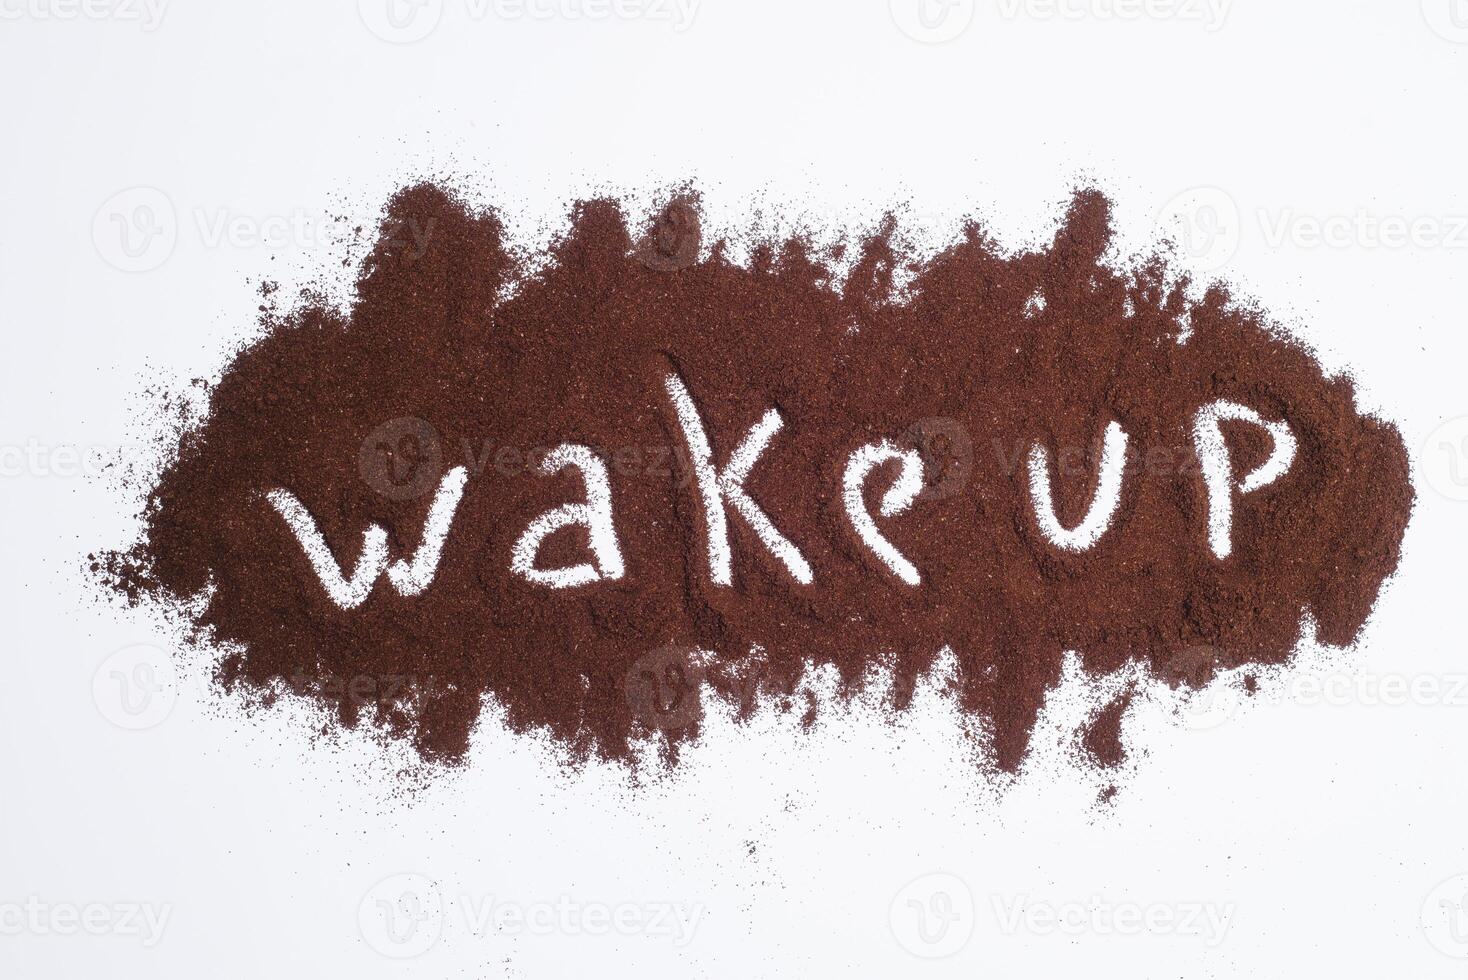 vakna upp ord skriven på jord kaffe lager, vit bakgrund foto